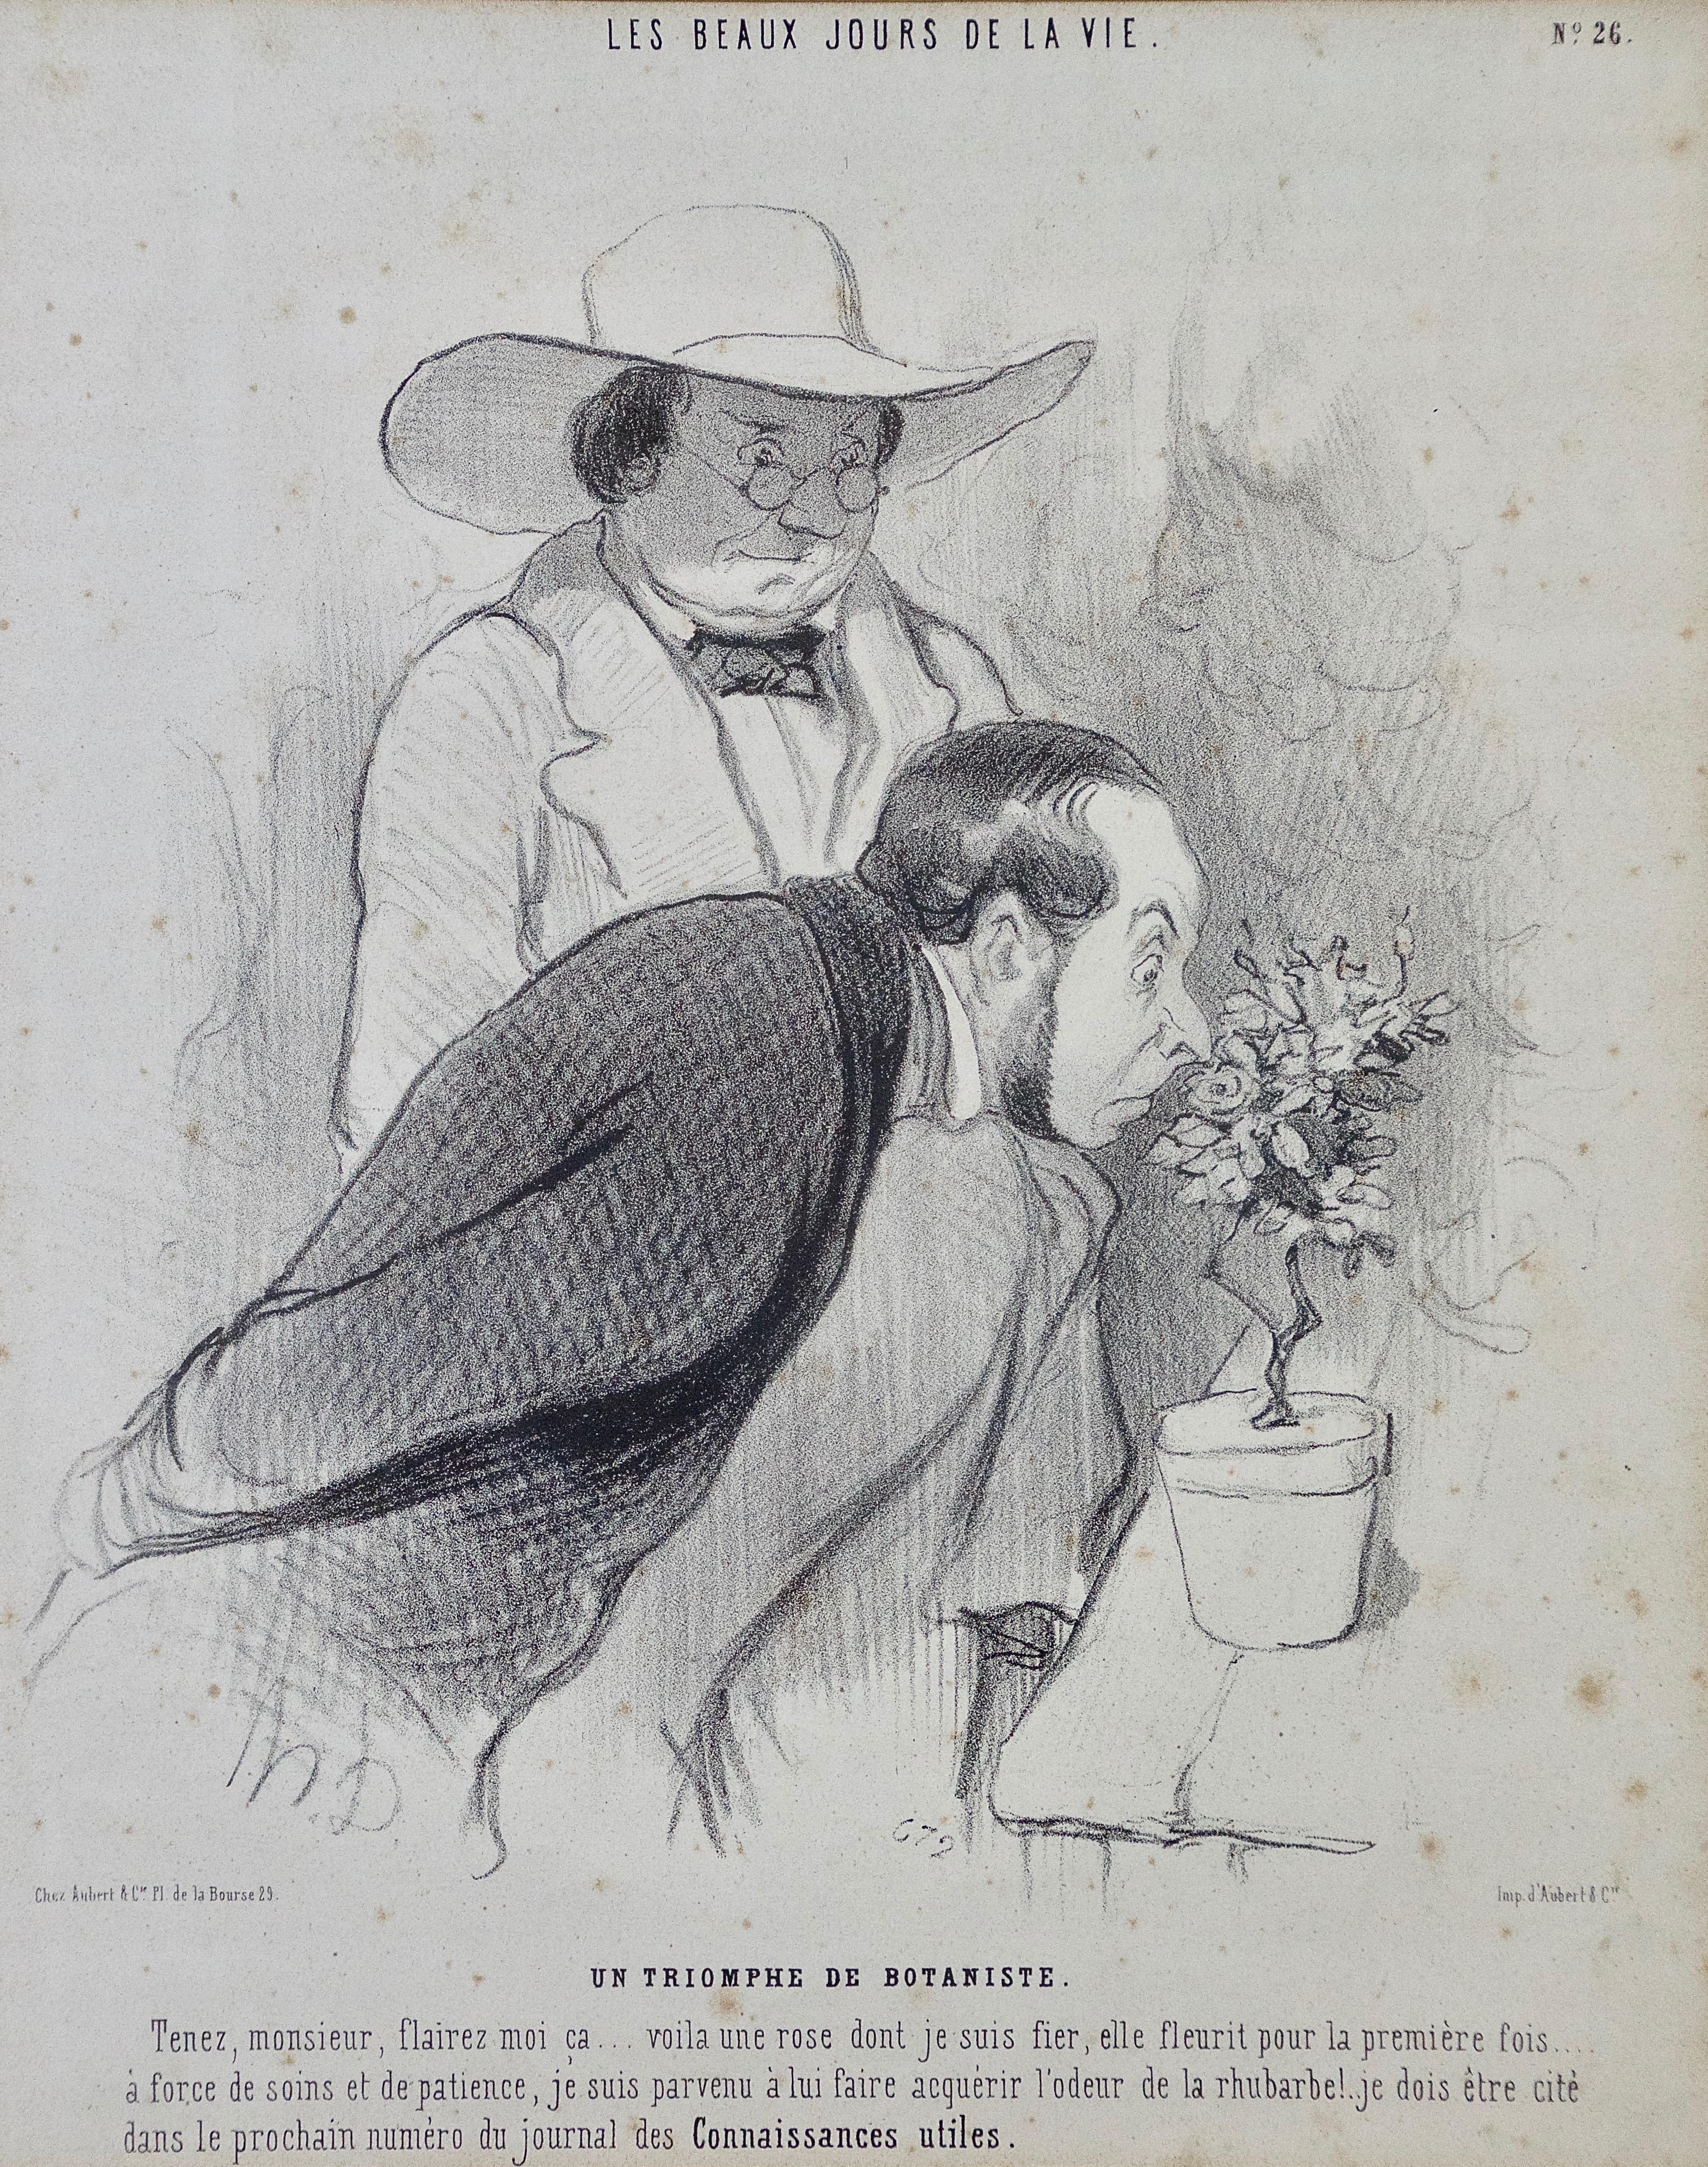 19th century botanist